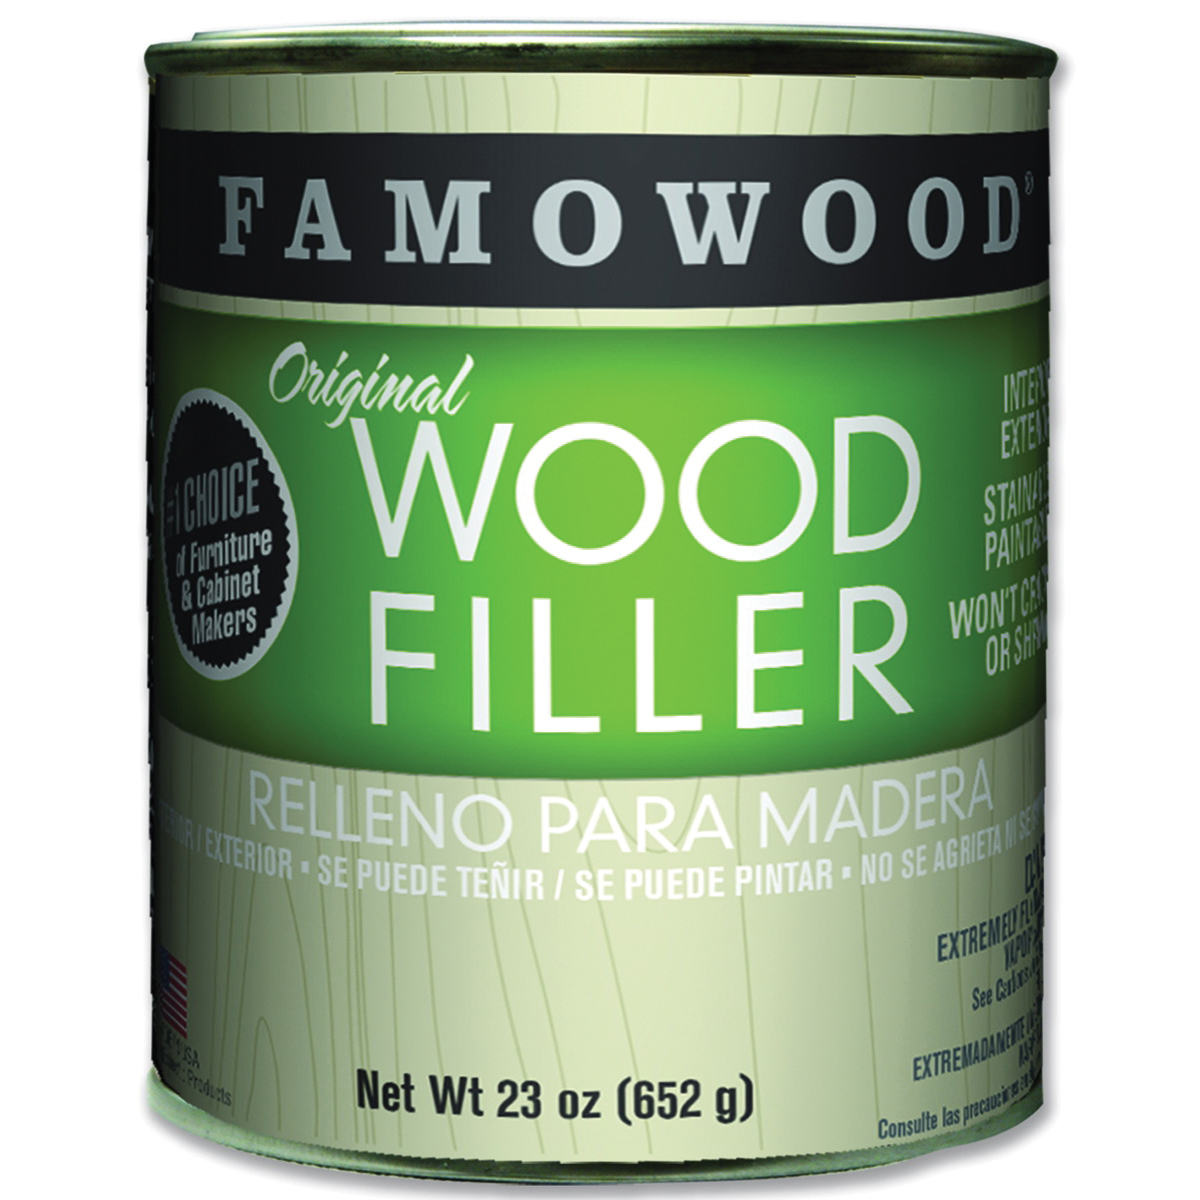 36021126 Original Wood Filler, Liquid, Paste, Natural/Tup/White Pine, 24 oz, Can